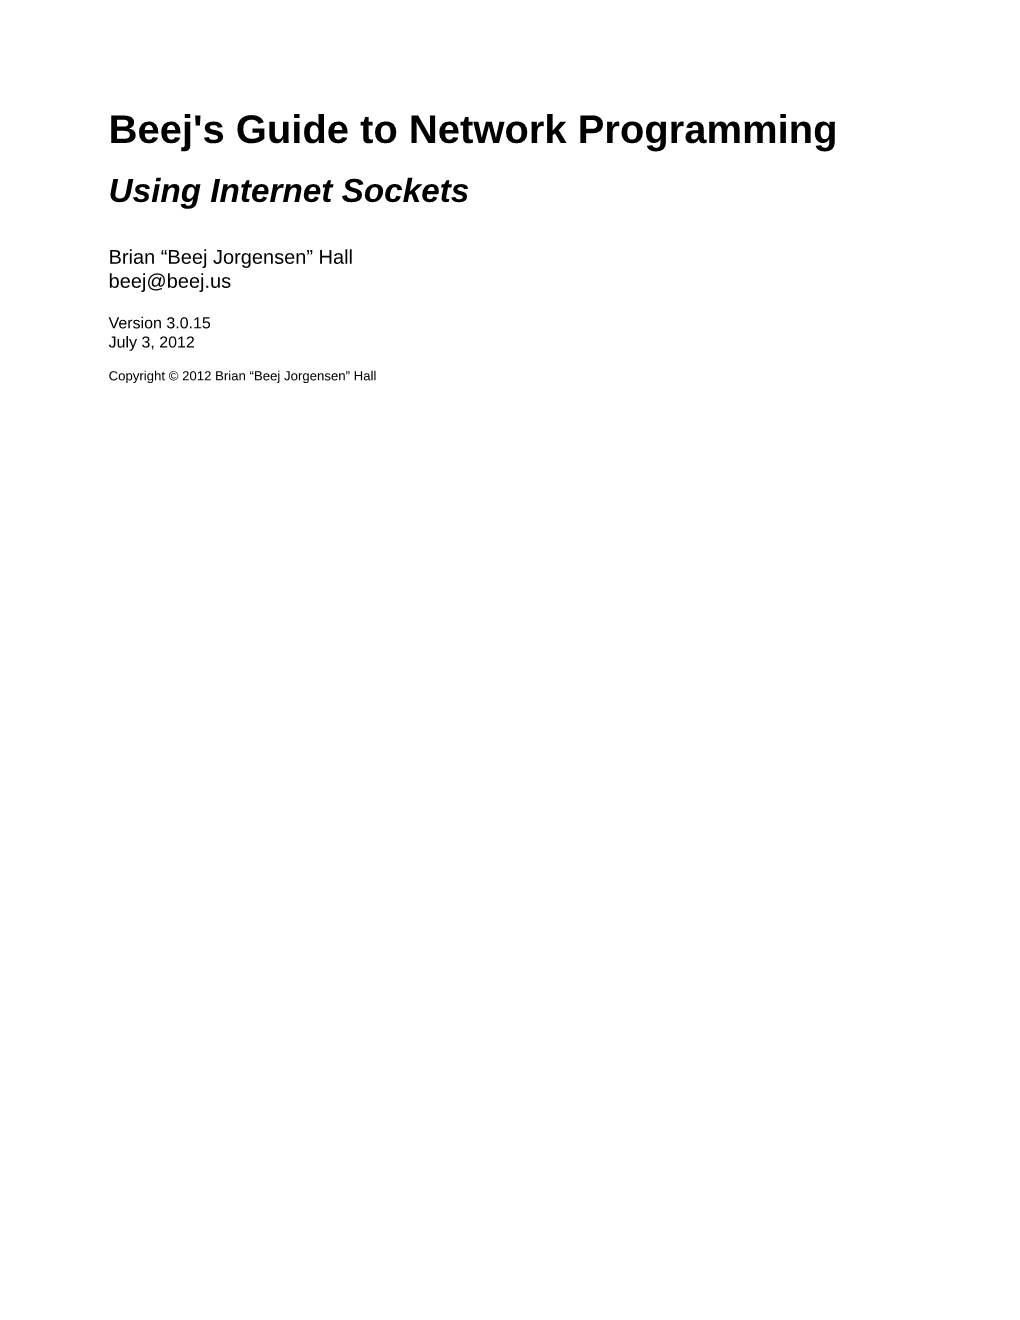 Beej's Guide to Network Programming Using Internet Sockets